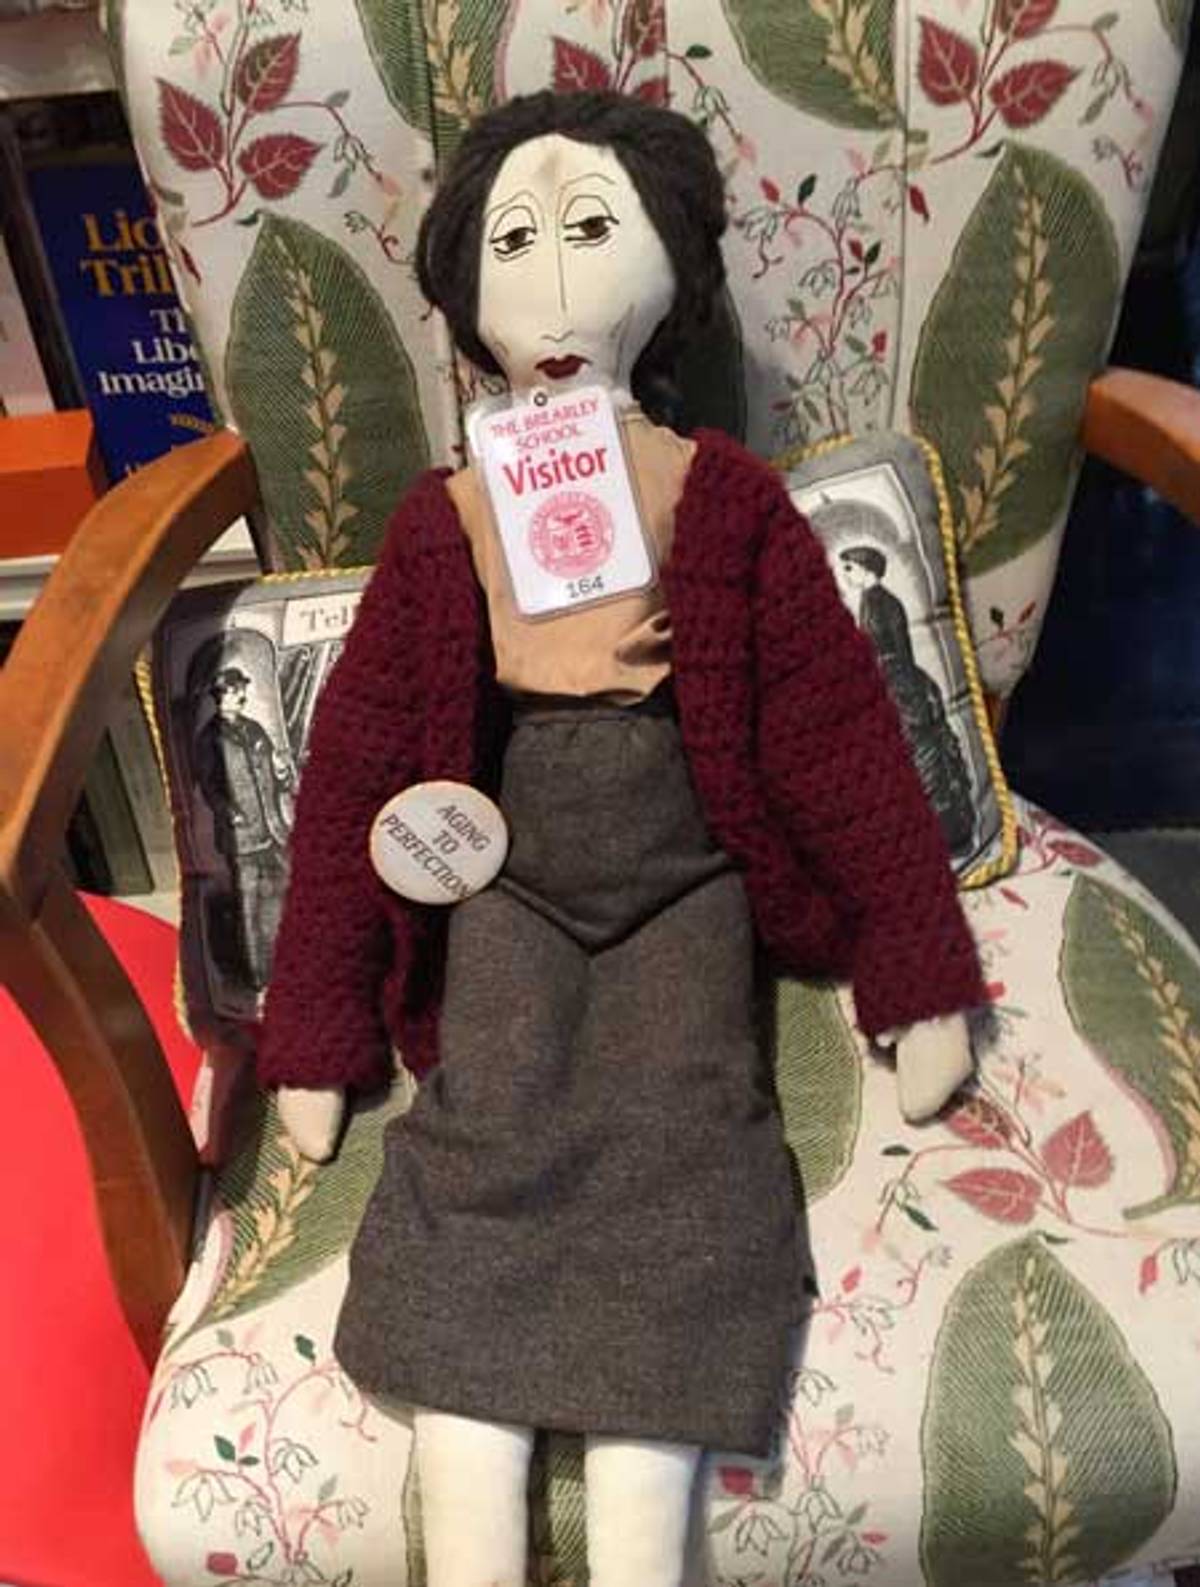 The Virginia Woolf doll. (Photo courtesy the author)